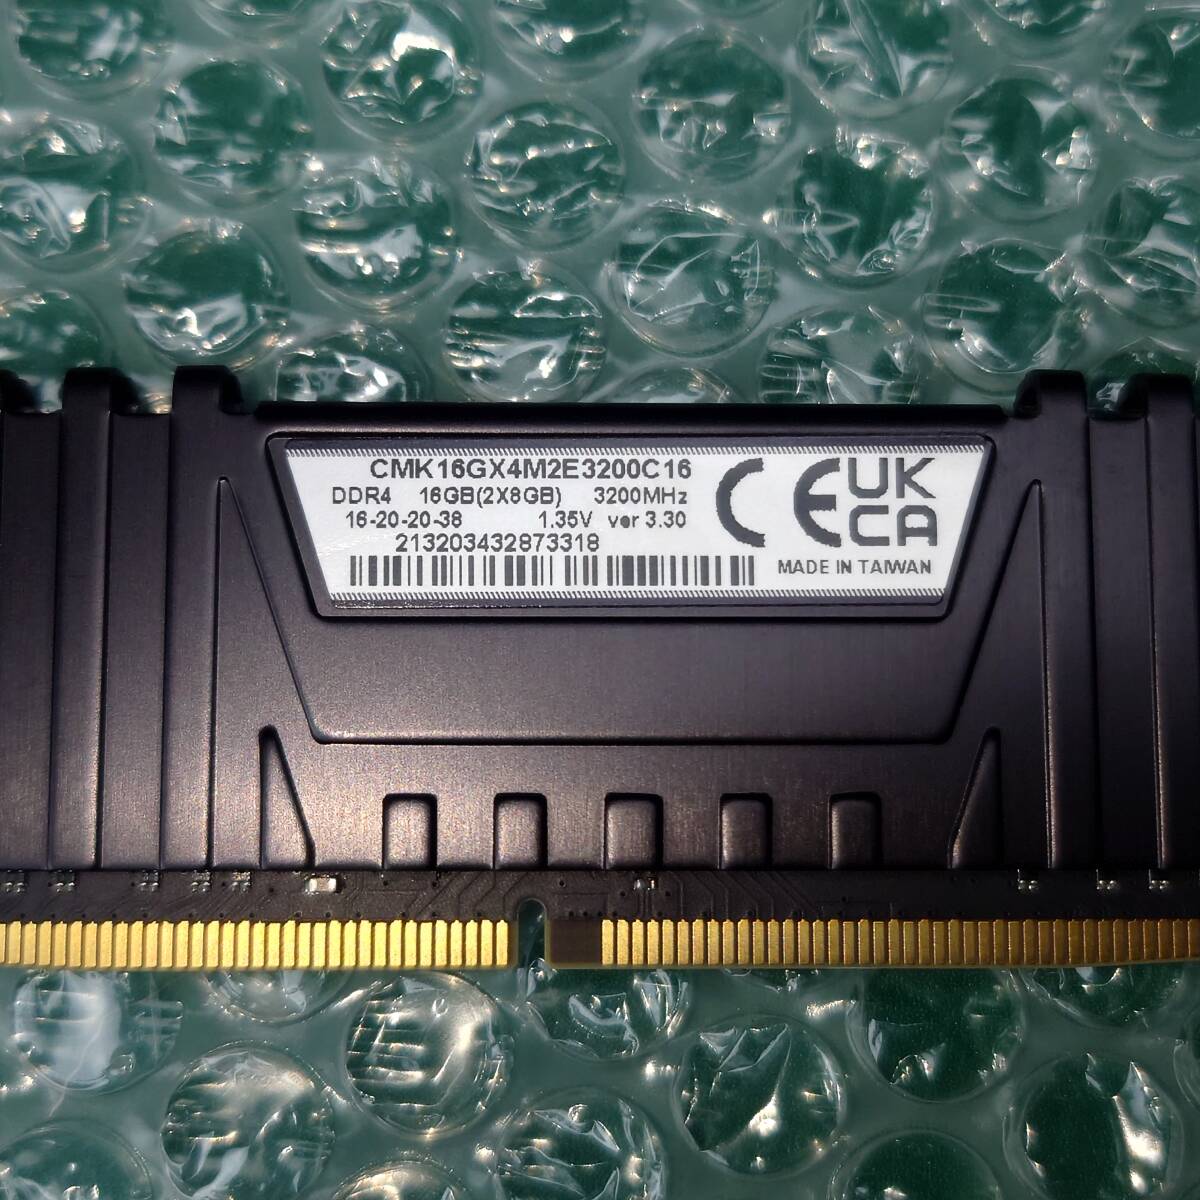 送料無料 CORSAIR VENGEANCE LPX DDR4-3200MHz 16GB (8GB×2) CMK16GX4M2E3200C16 中古 動作確認済みの画像4